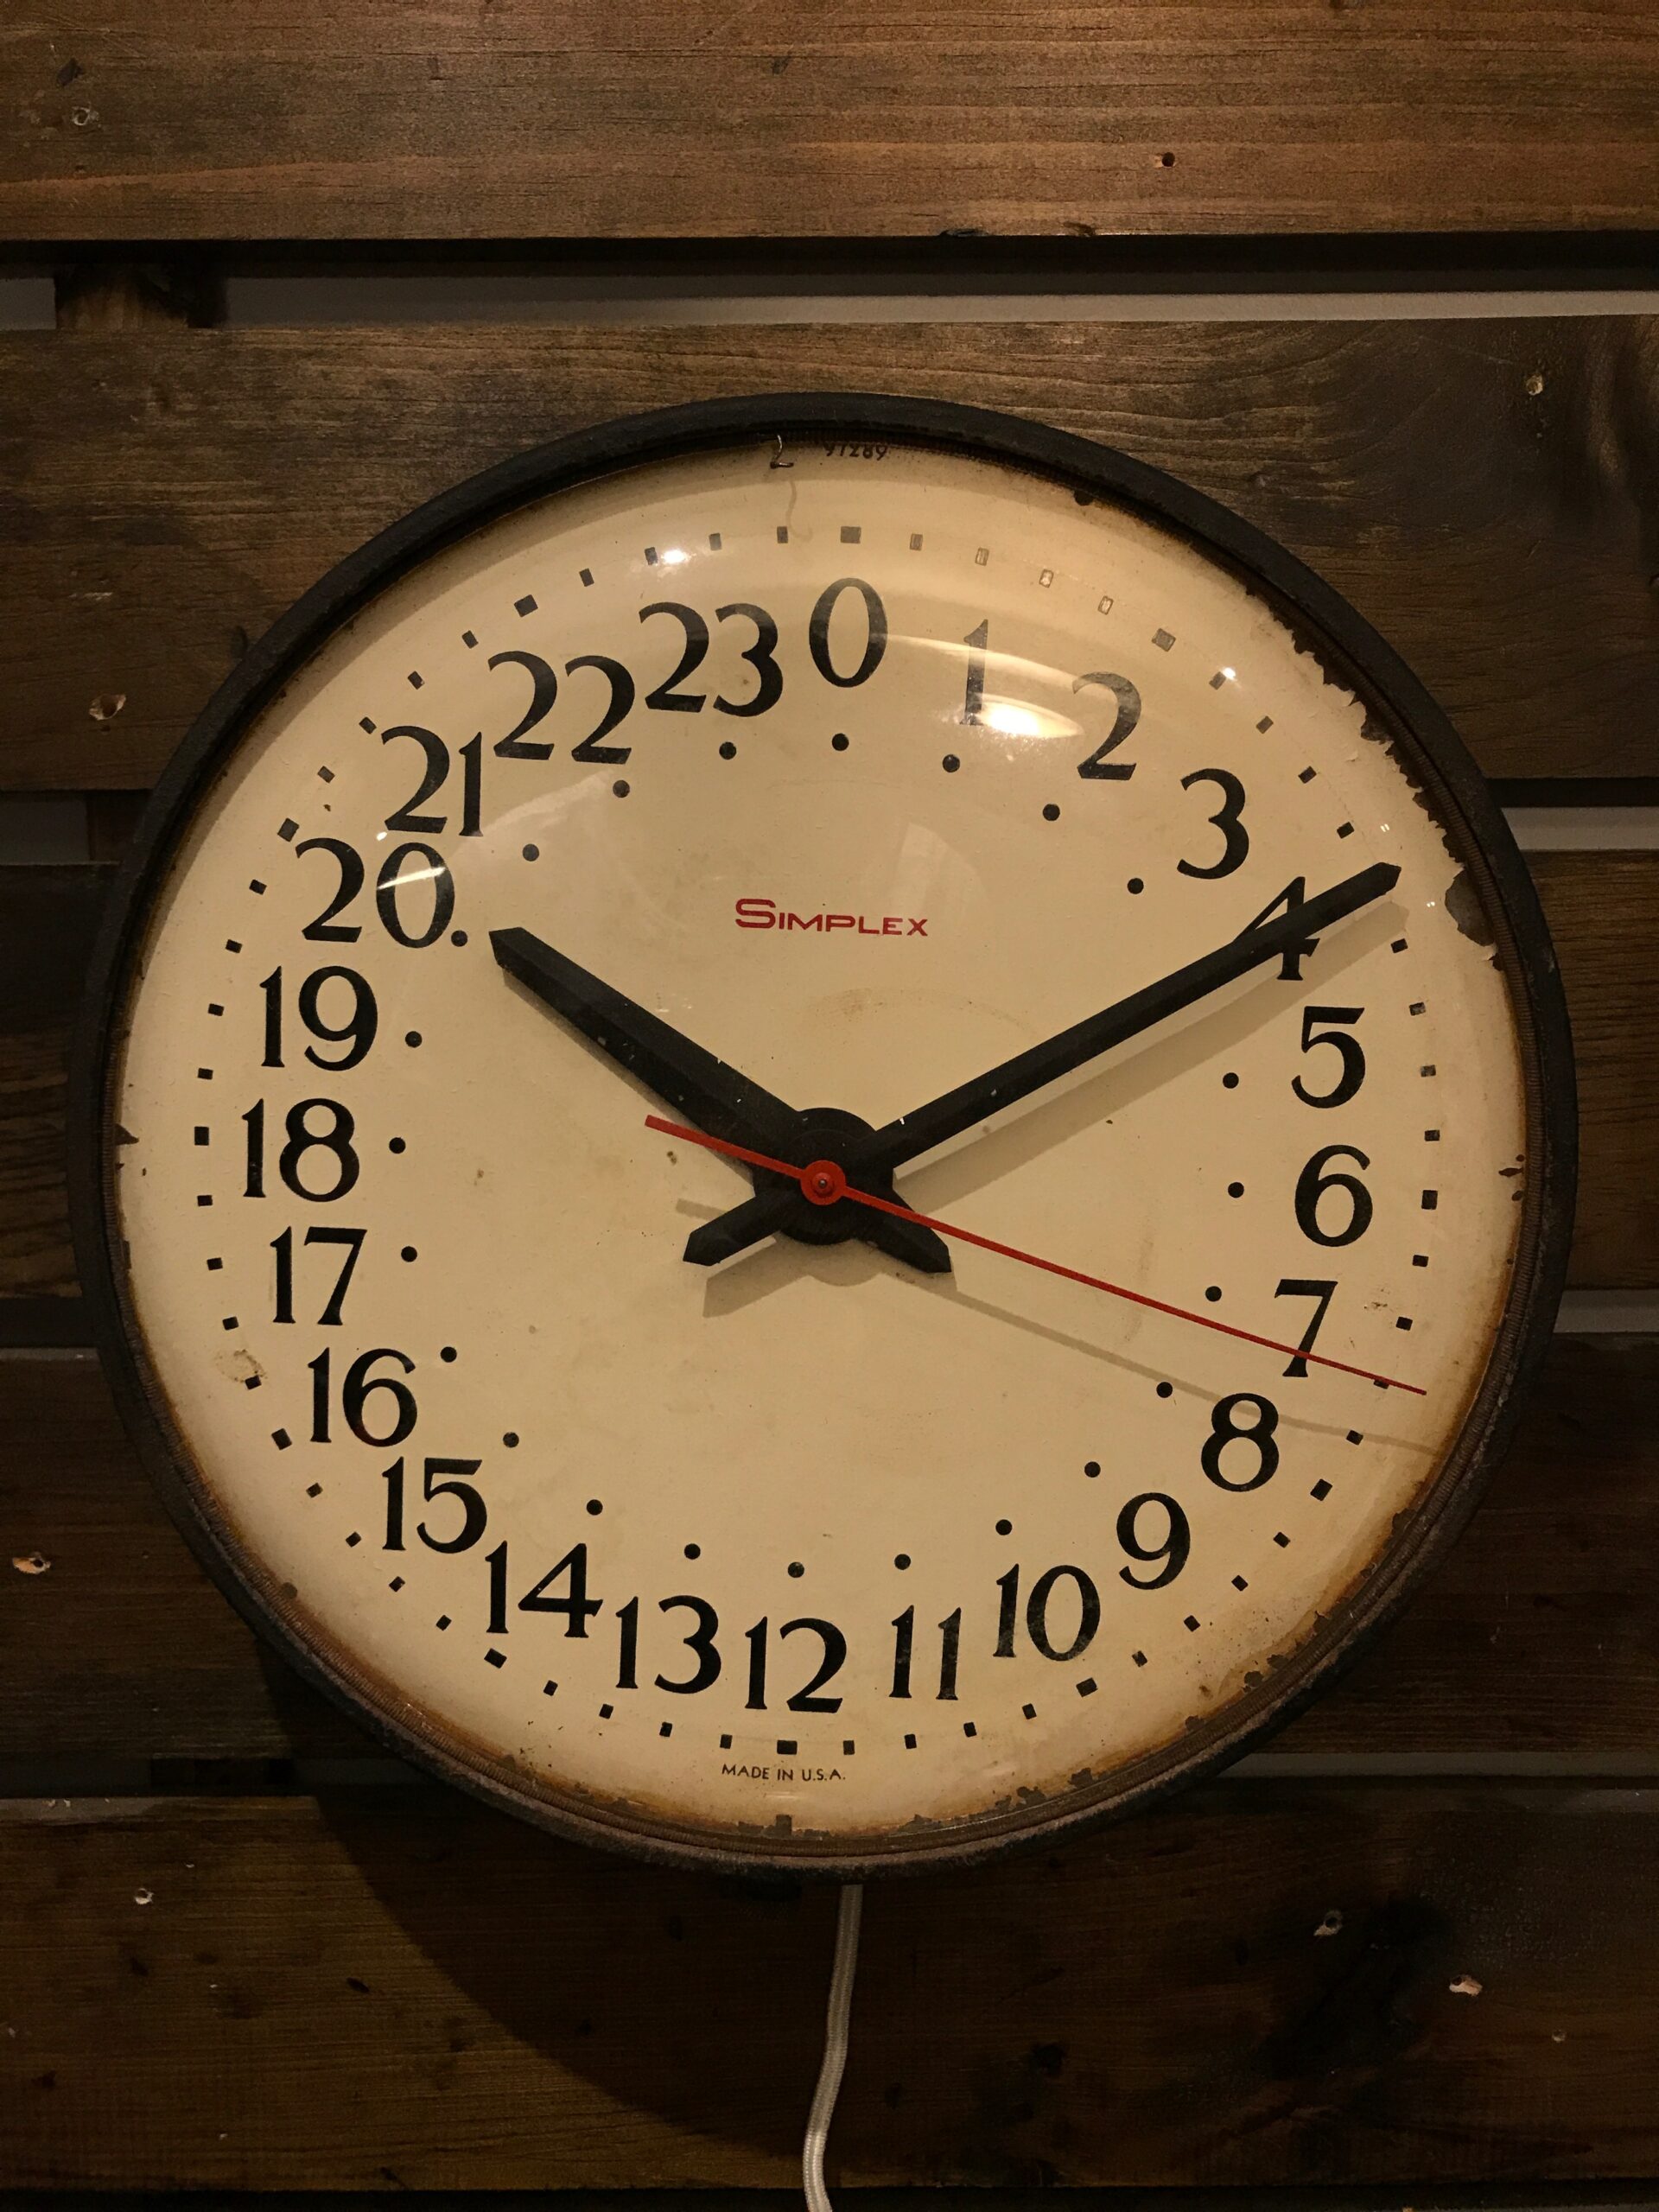 24-hour clock - Wikipedia